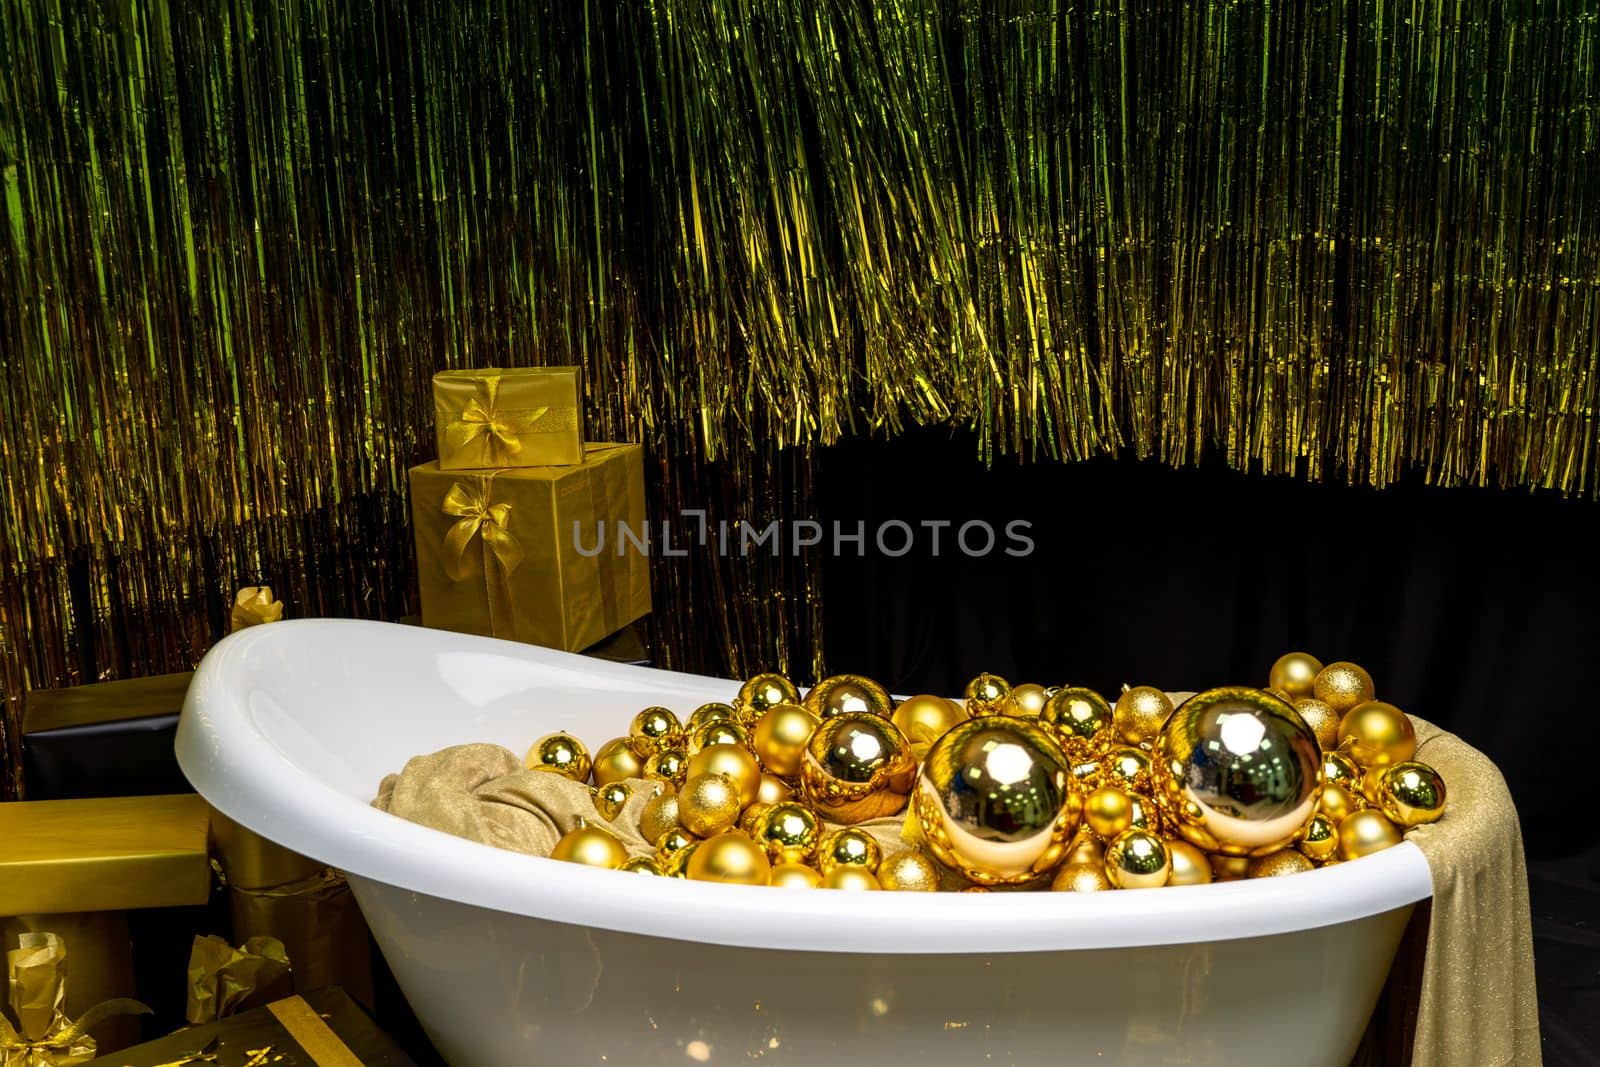 Bathtub full of golden balls. Vintage bright bathroom decorated with festive golden balls. New Year, Christmas bathroom interior